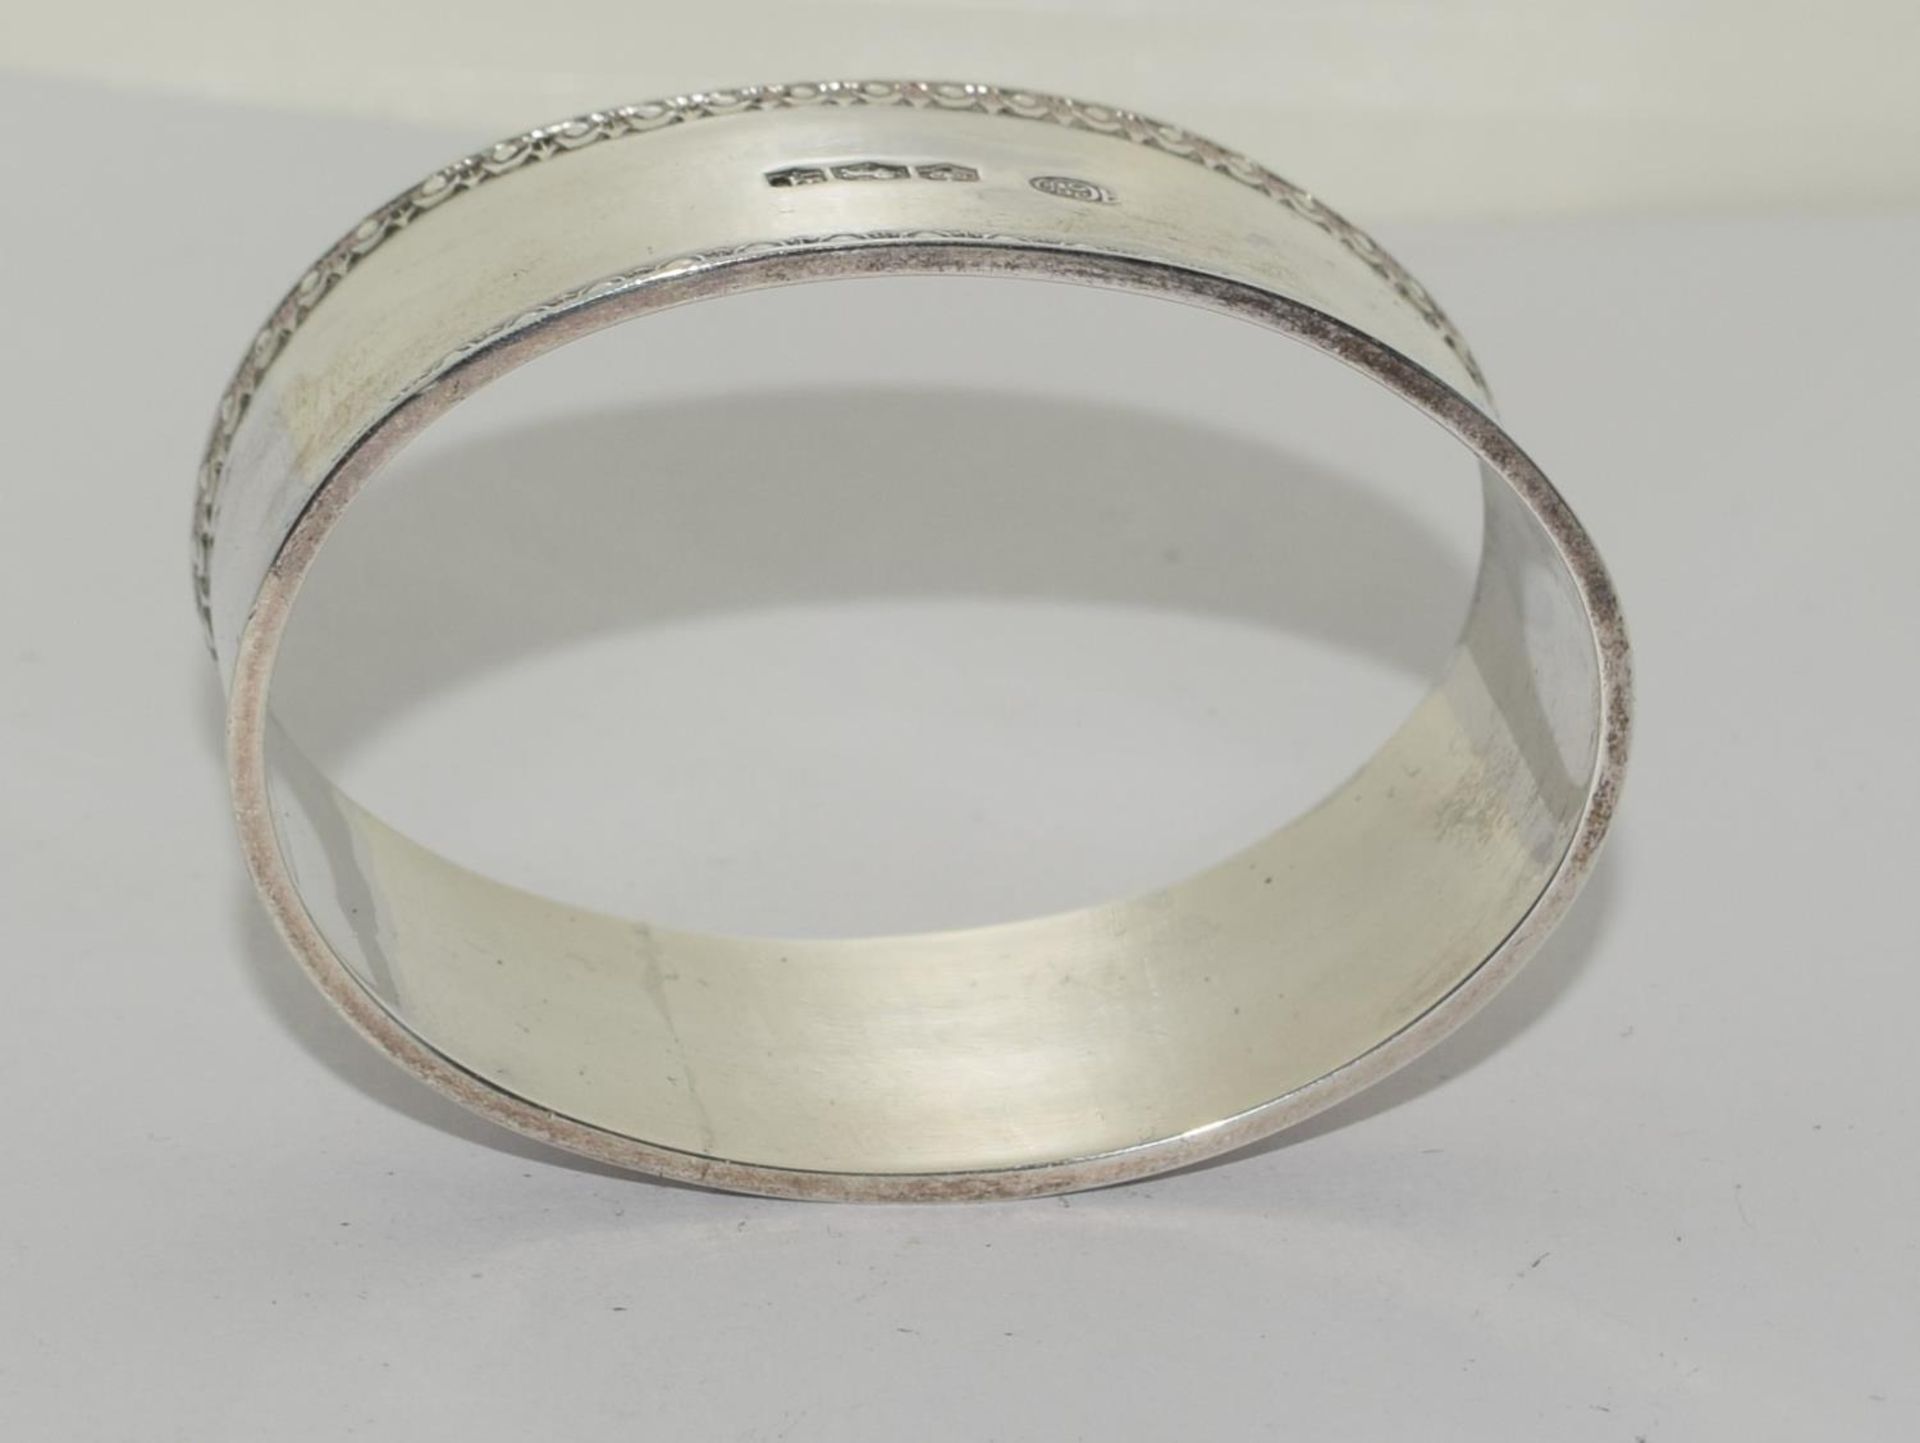 Silver Nap Kin ring in original presentation box - Image 5 of 5